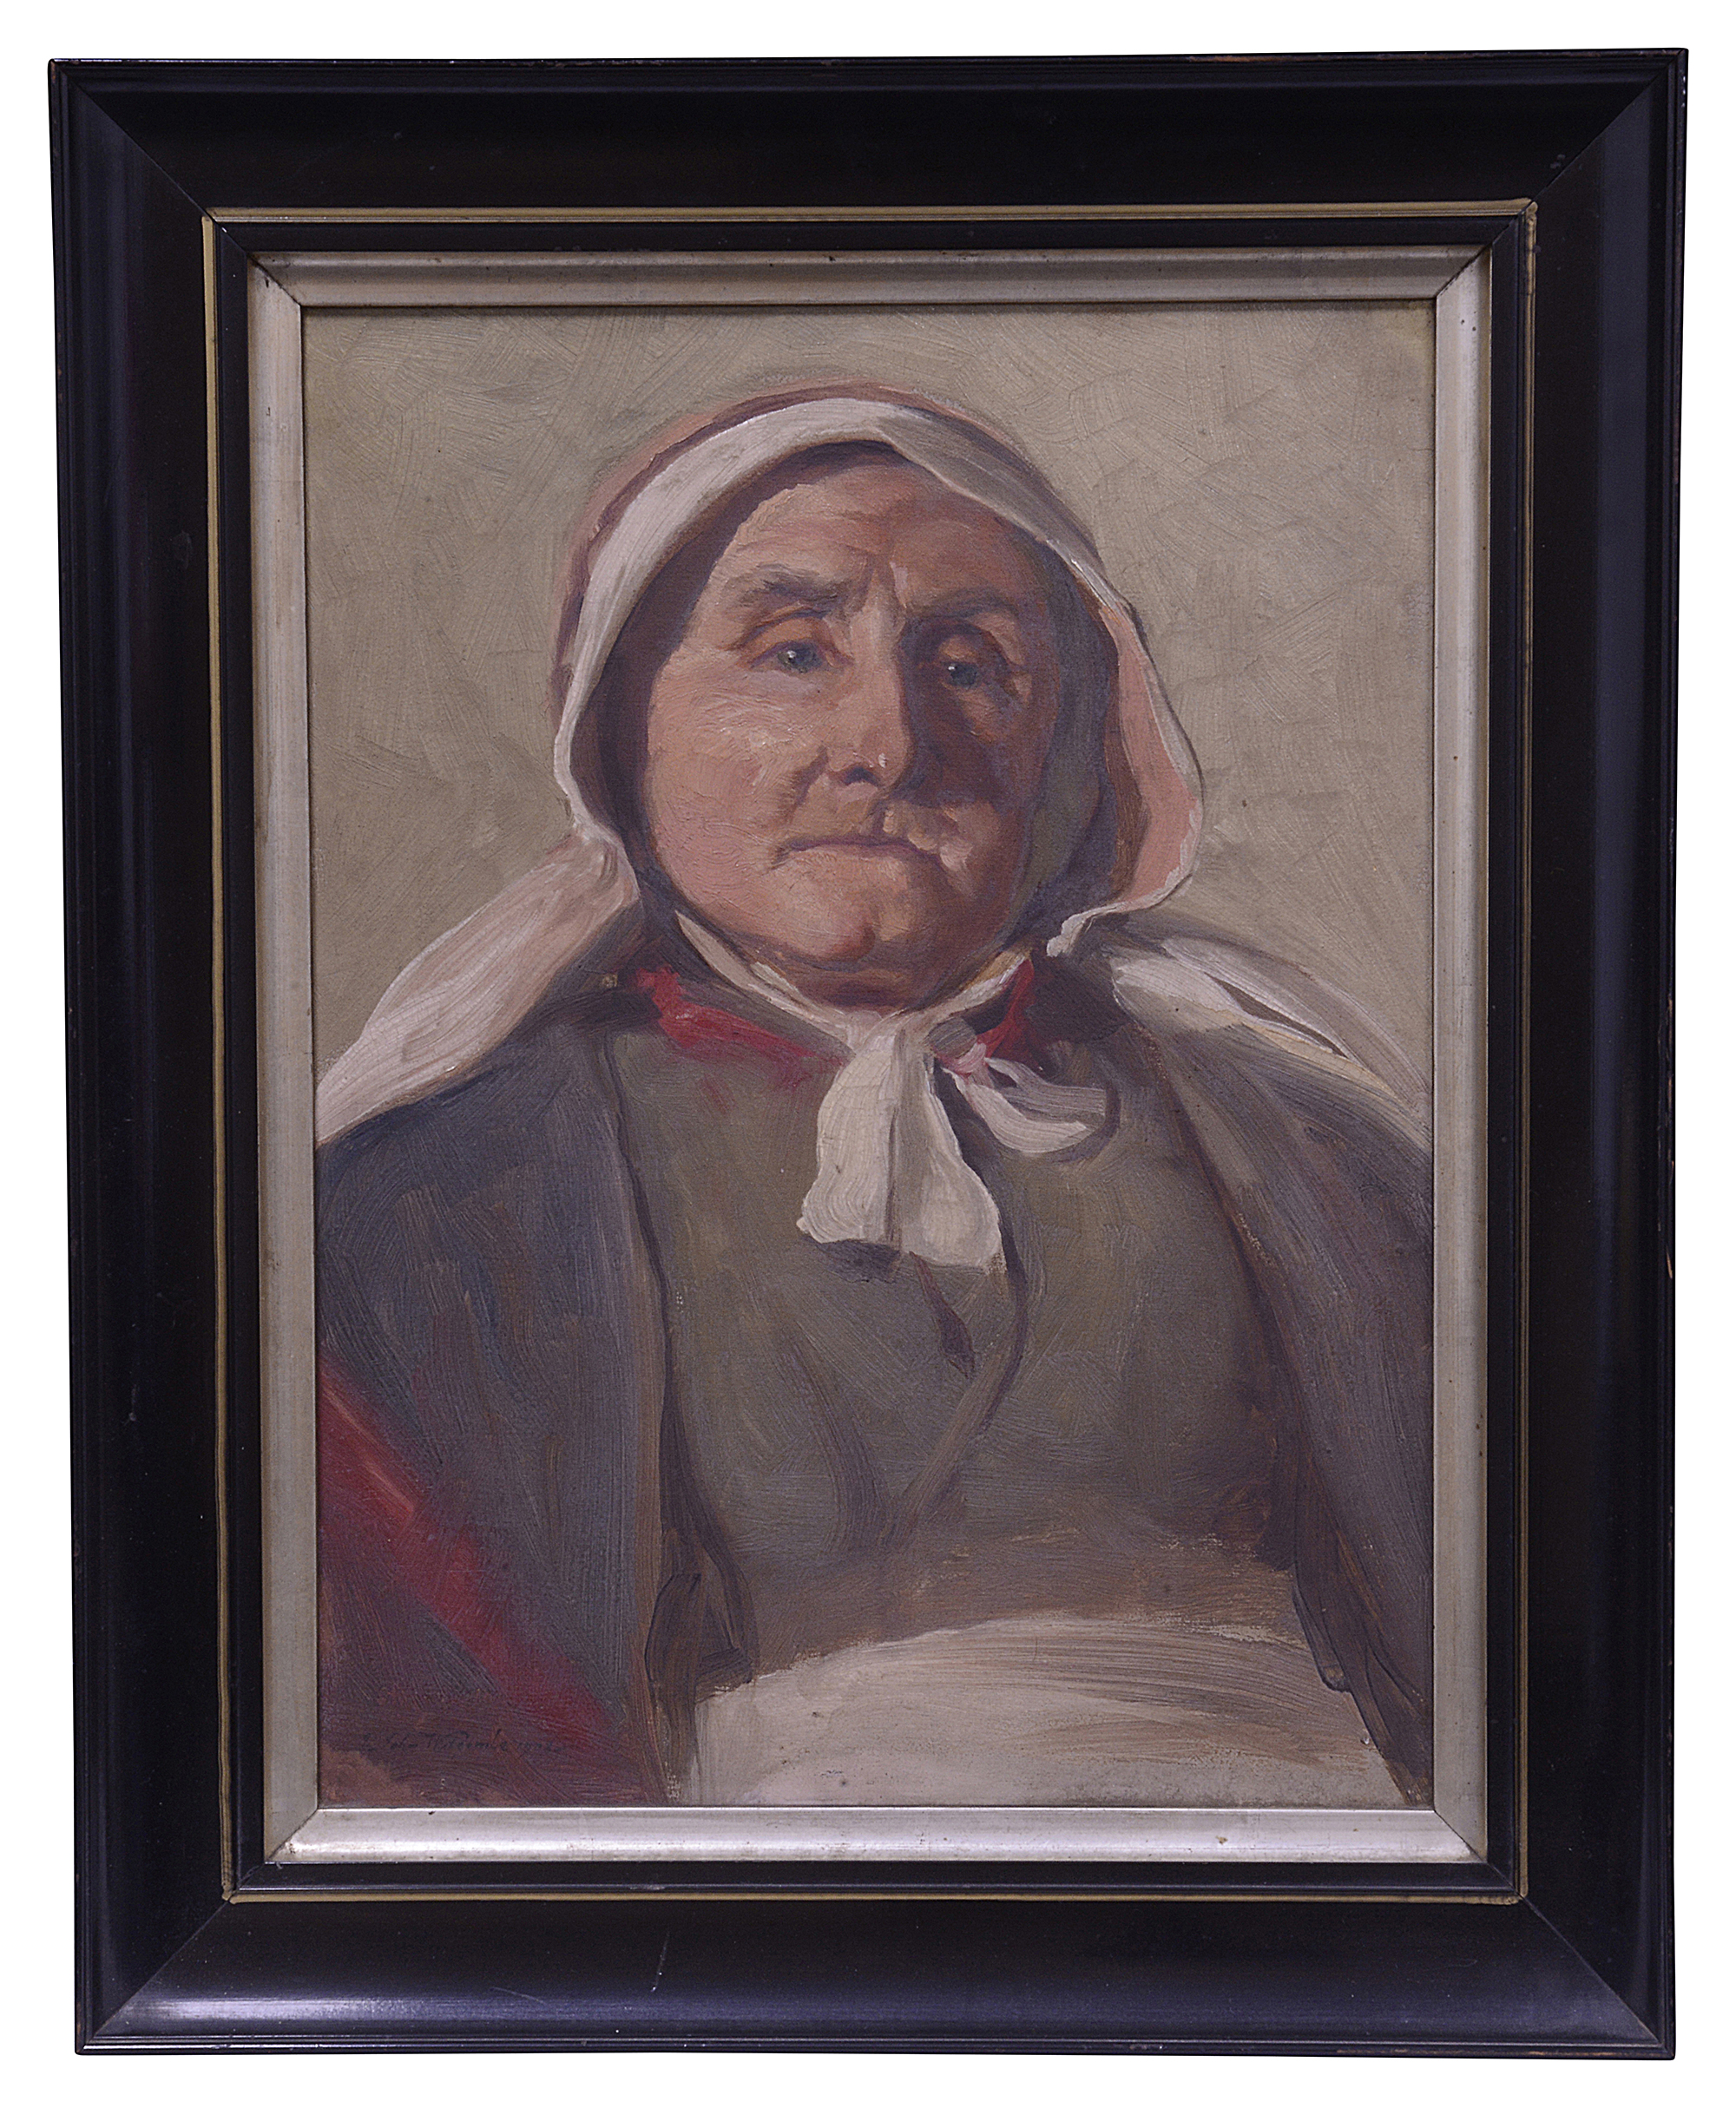 John J. Witcombe (British, 1872-1918) 'Portrait of a Lady wearing a Headscarf'